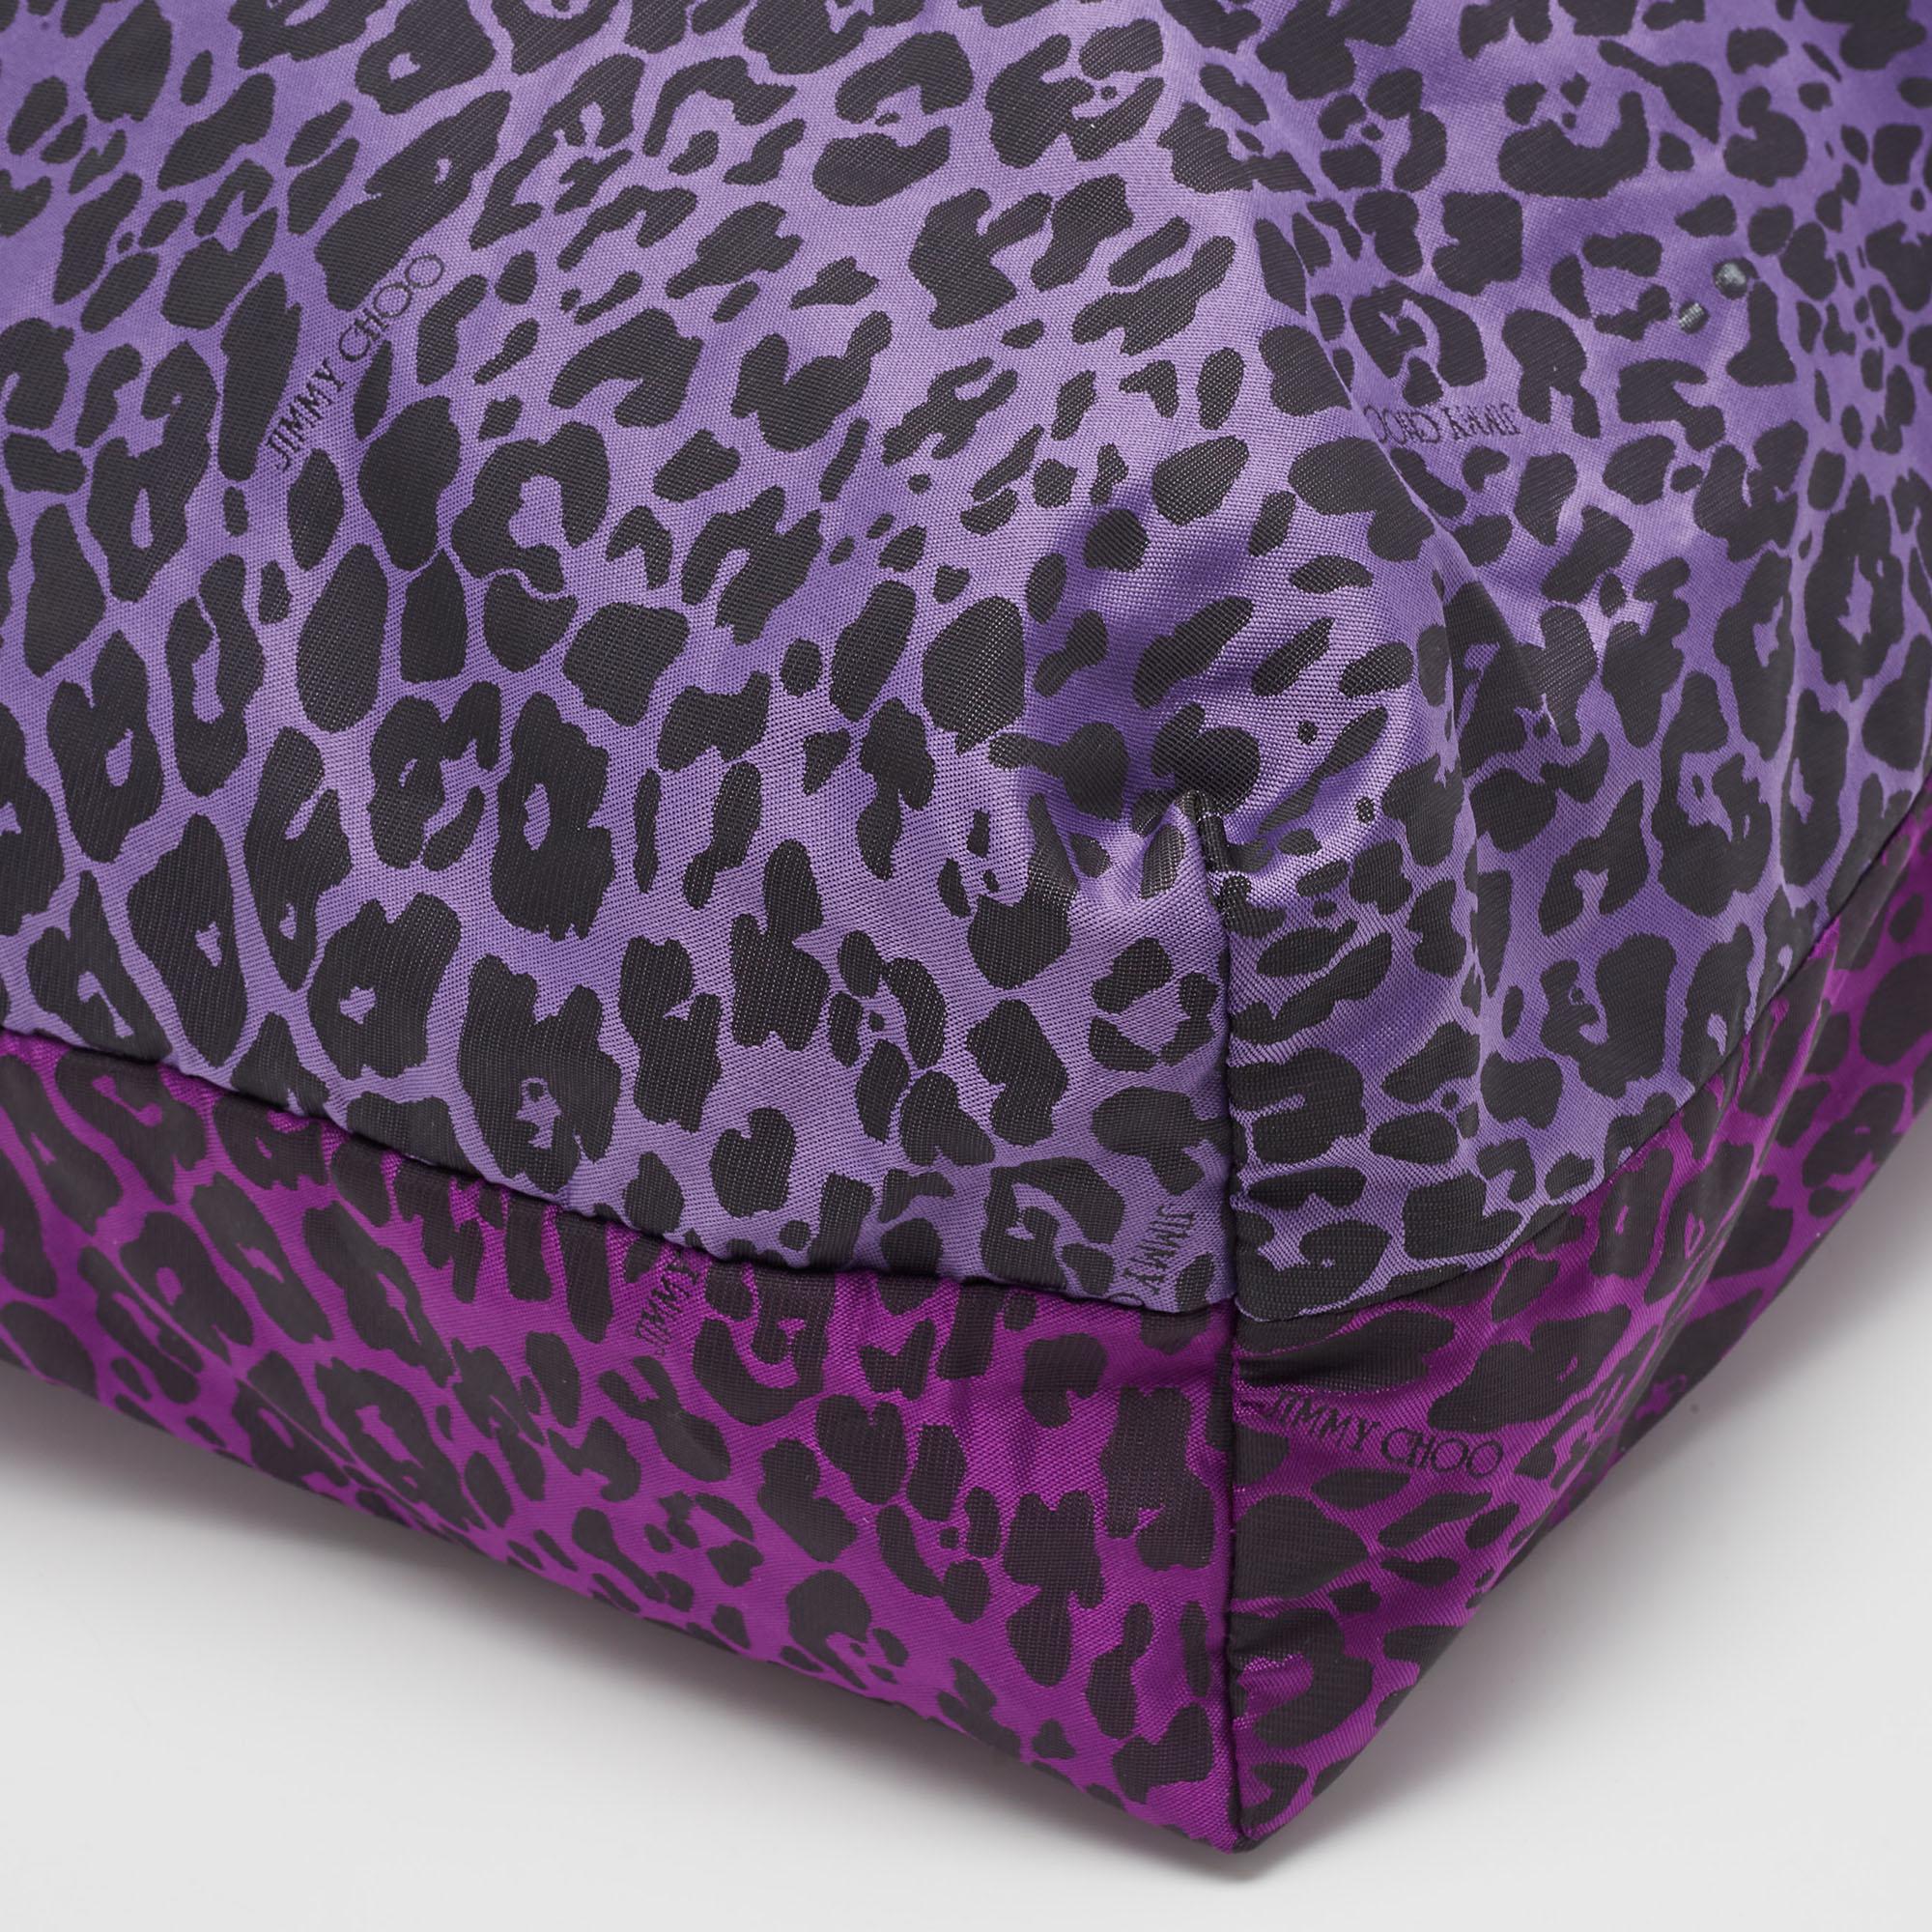 Jimmy Choo Purple/Black Leopard Print Fabric Zip Shopper Tote For Sale 1